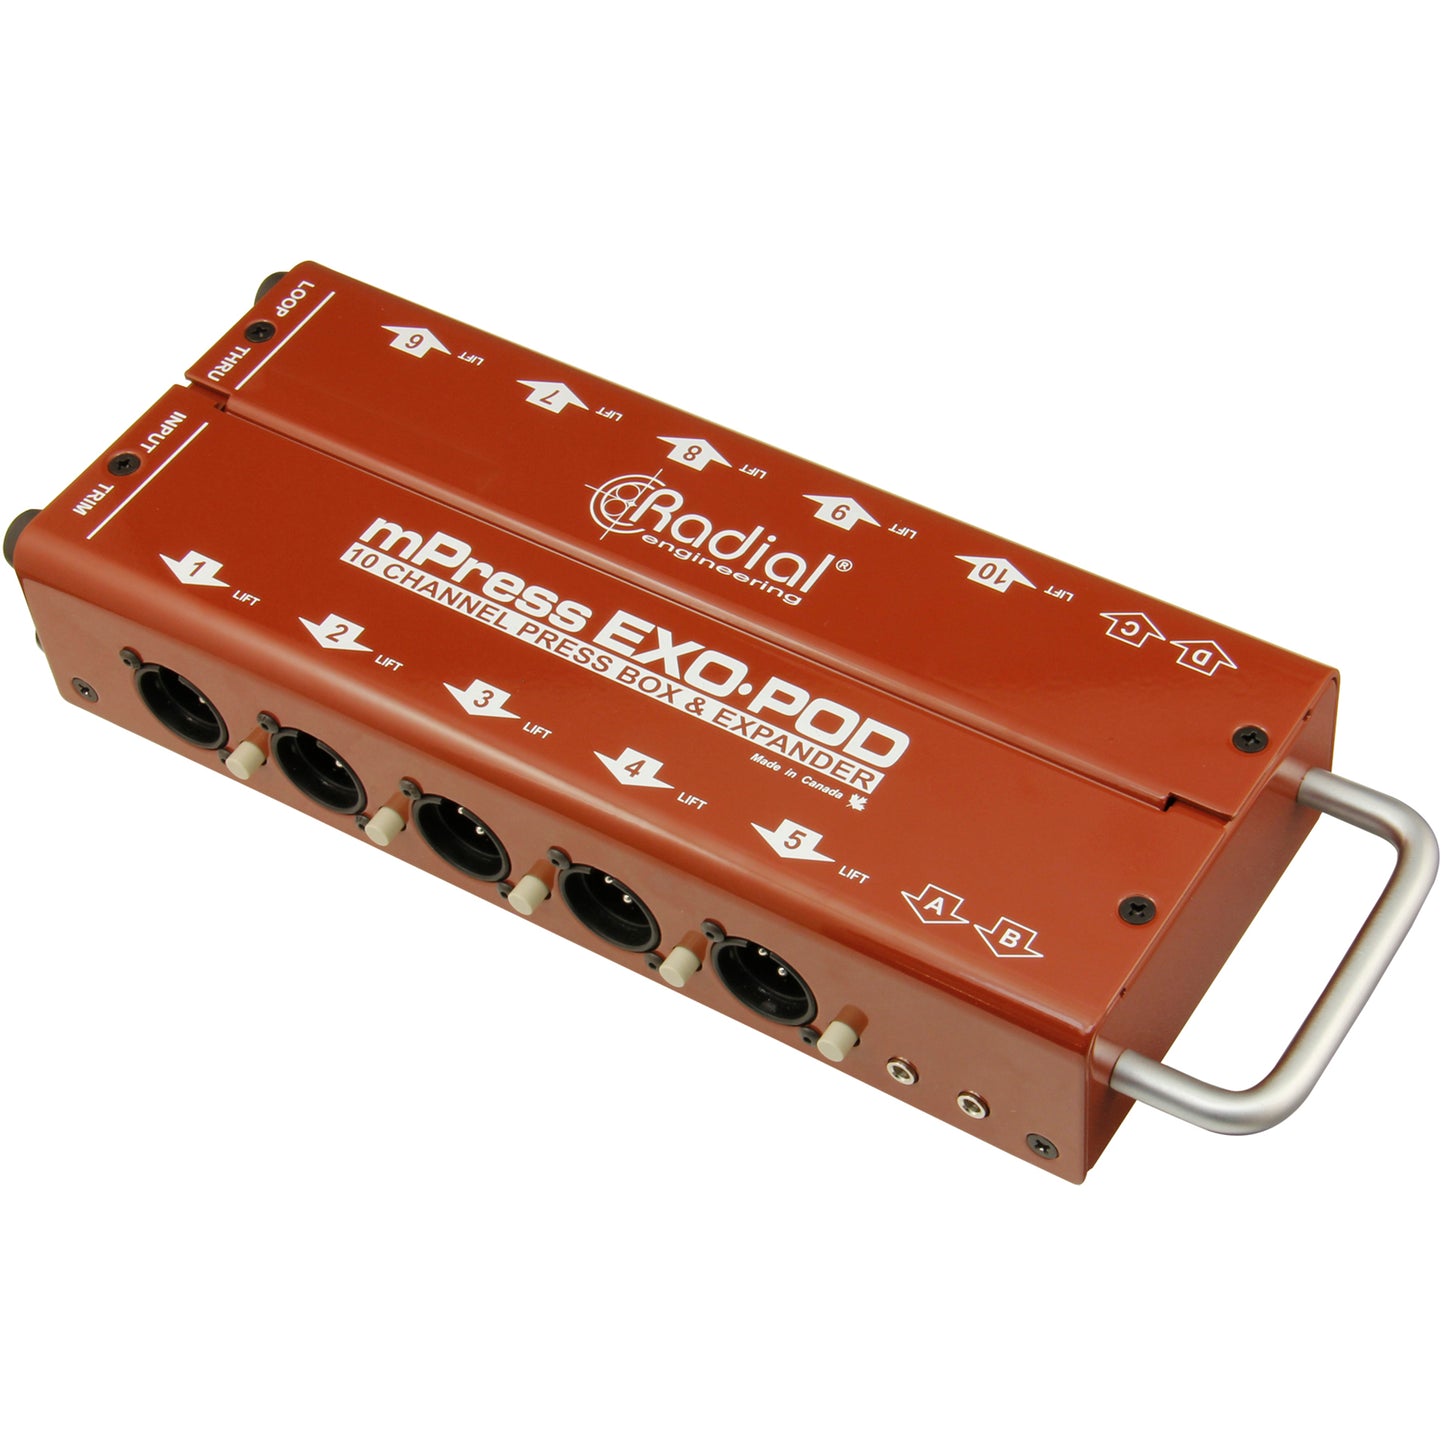 Radial Engineering EXO-POD Press-Box Expander Floorbox R800 8012 00